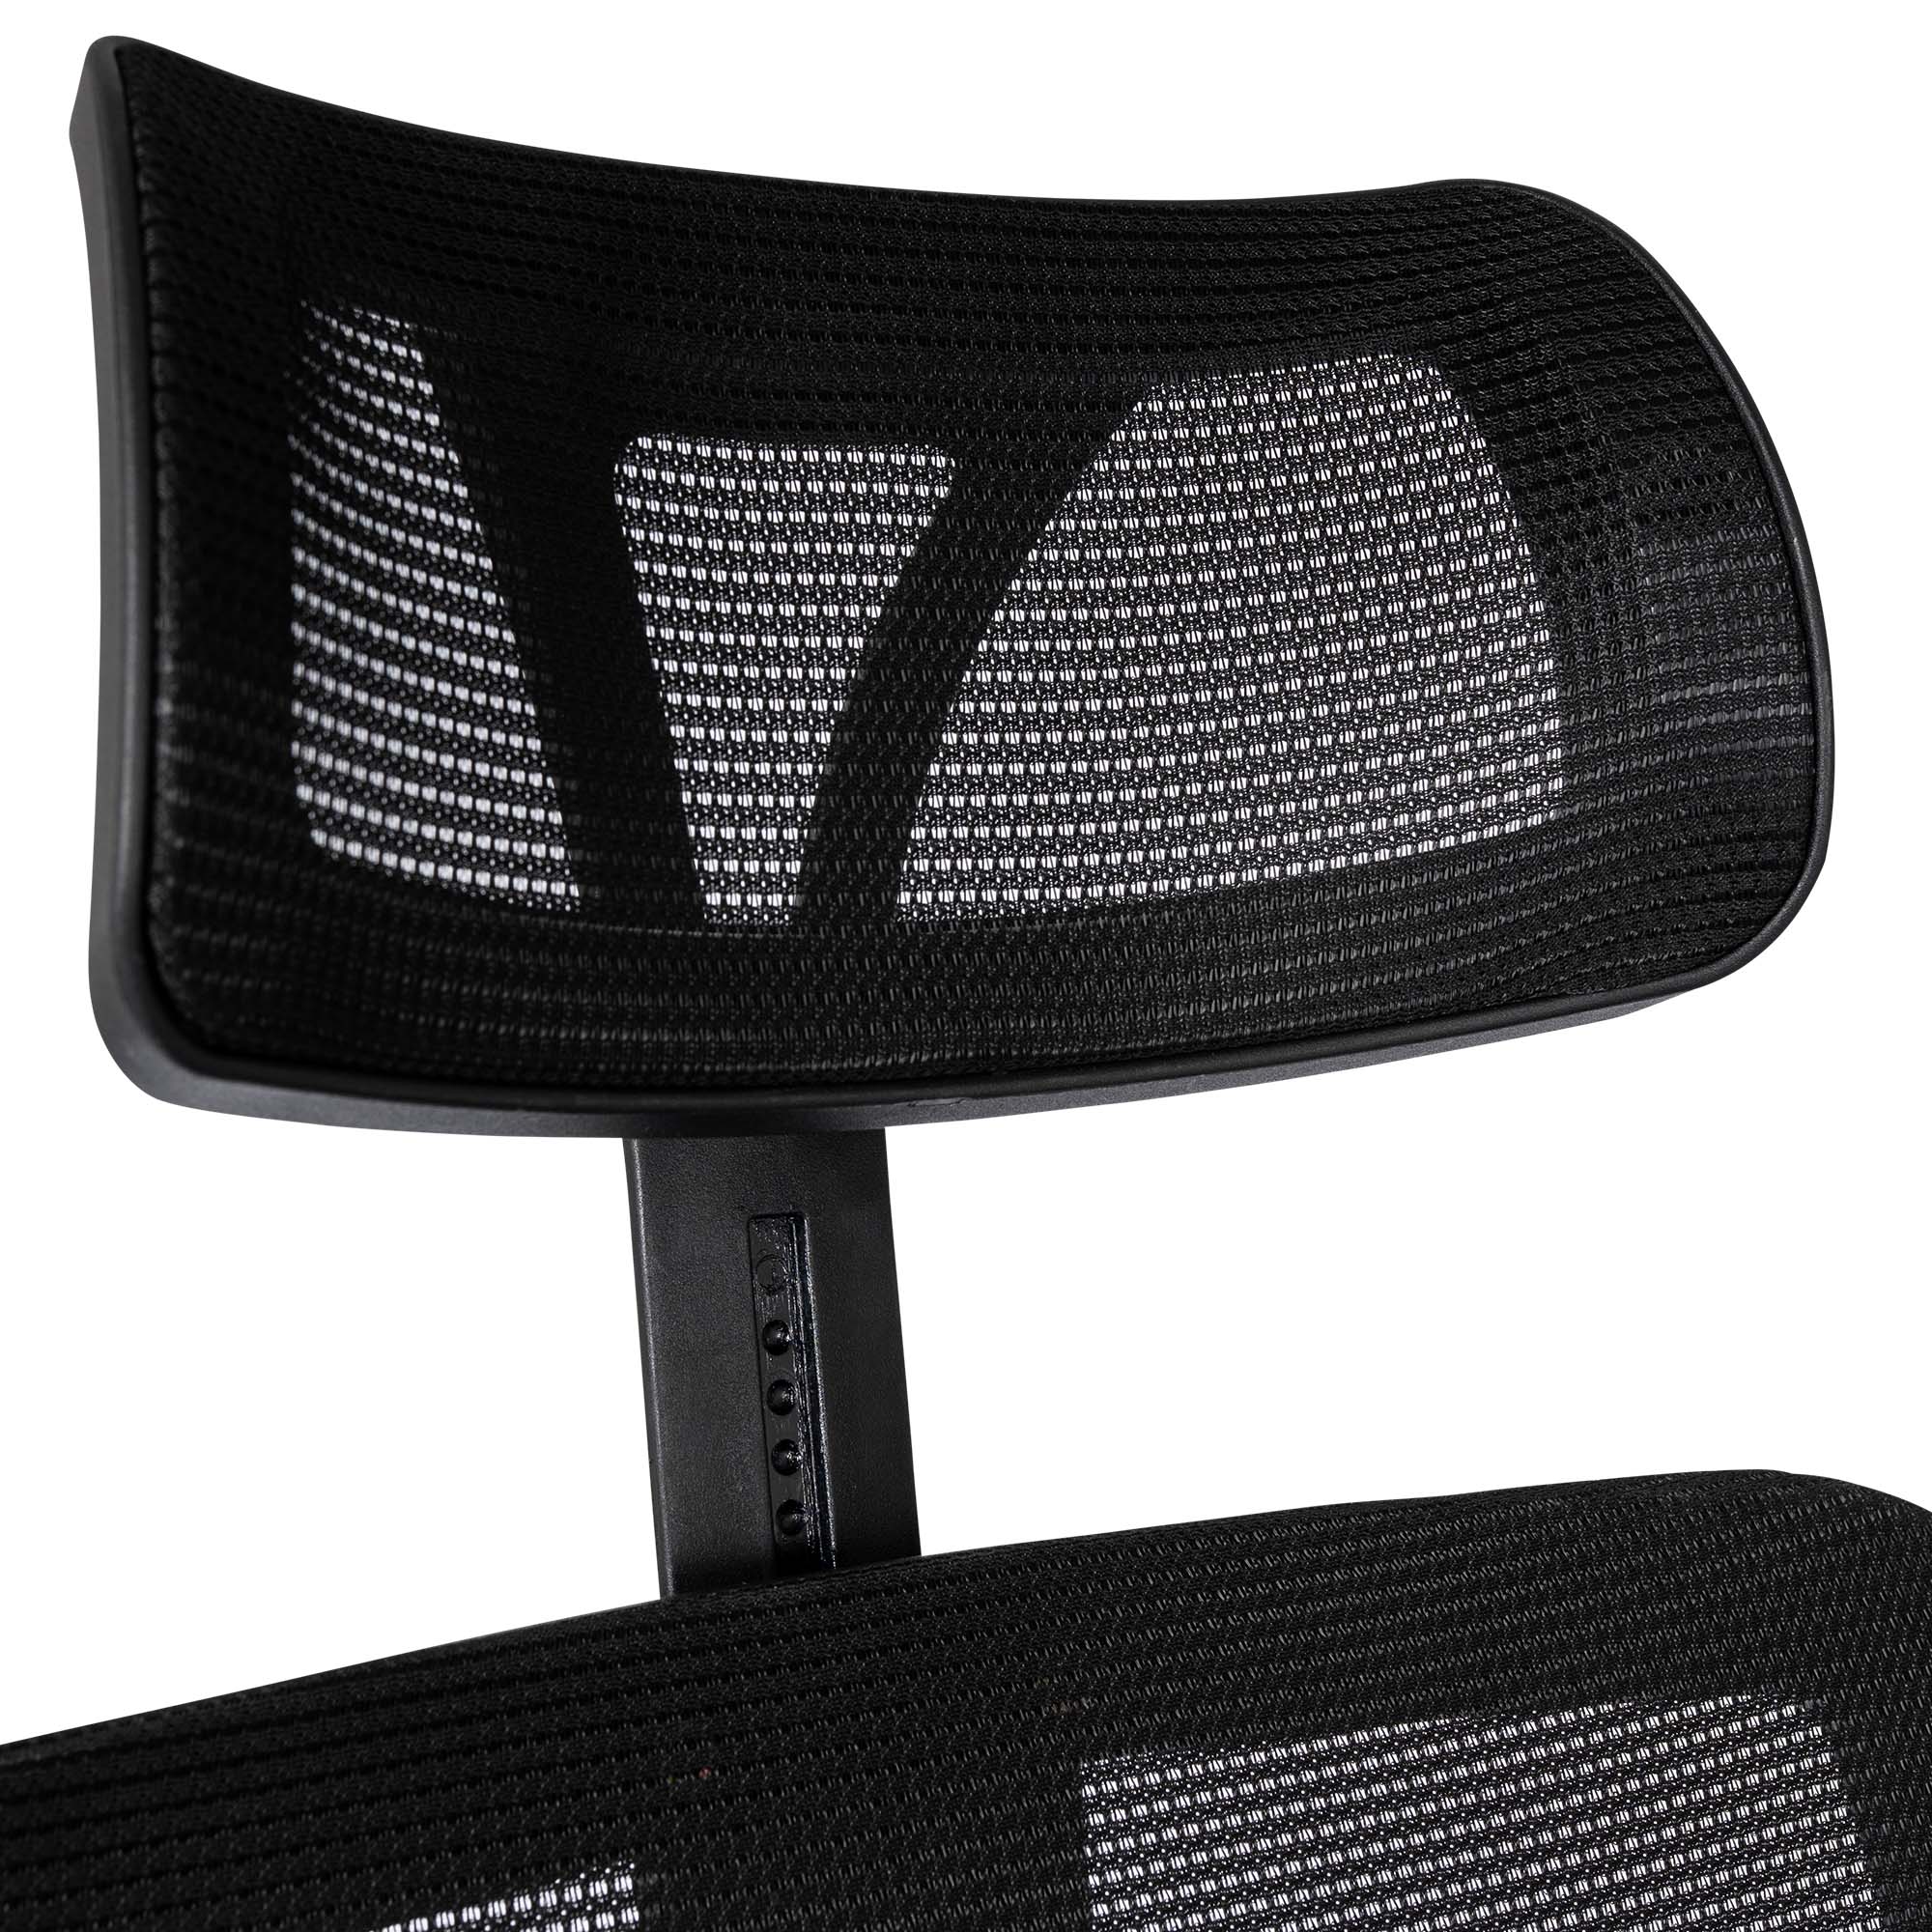 Ergodu Office Chair with Adjustable headrest